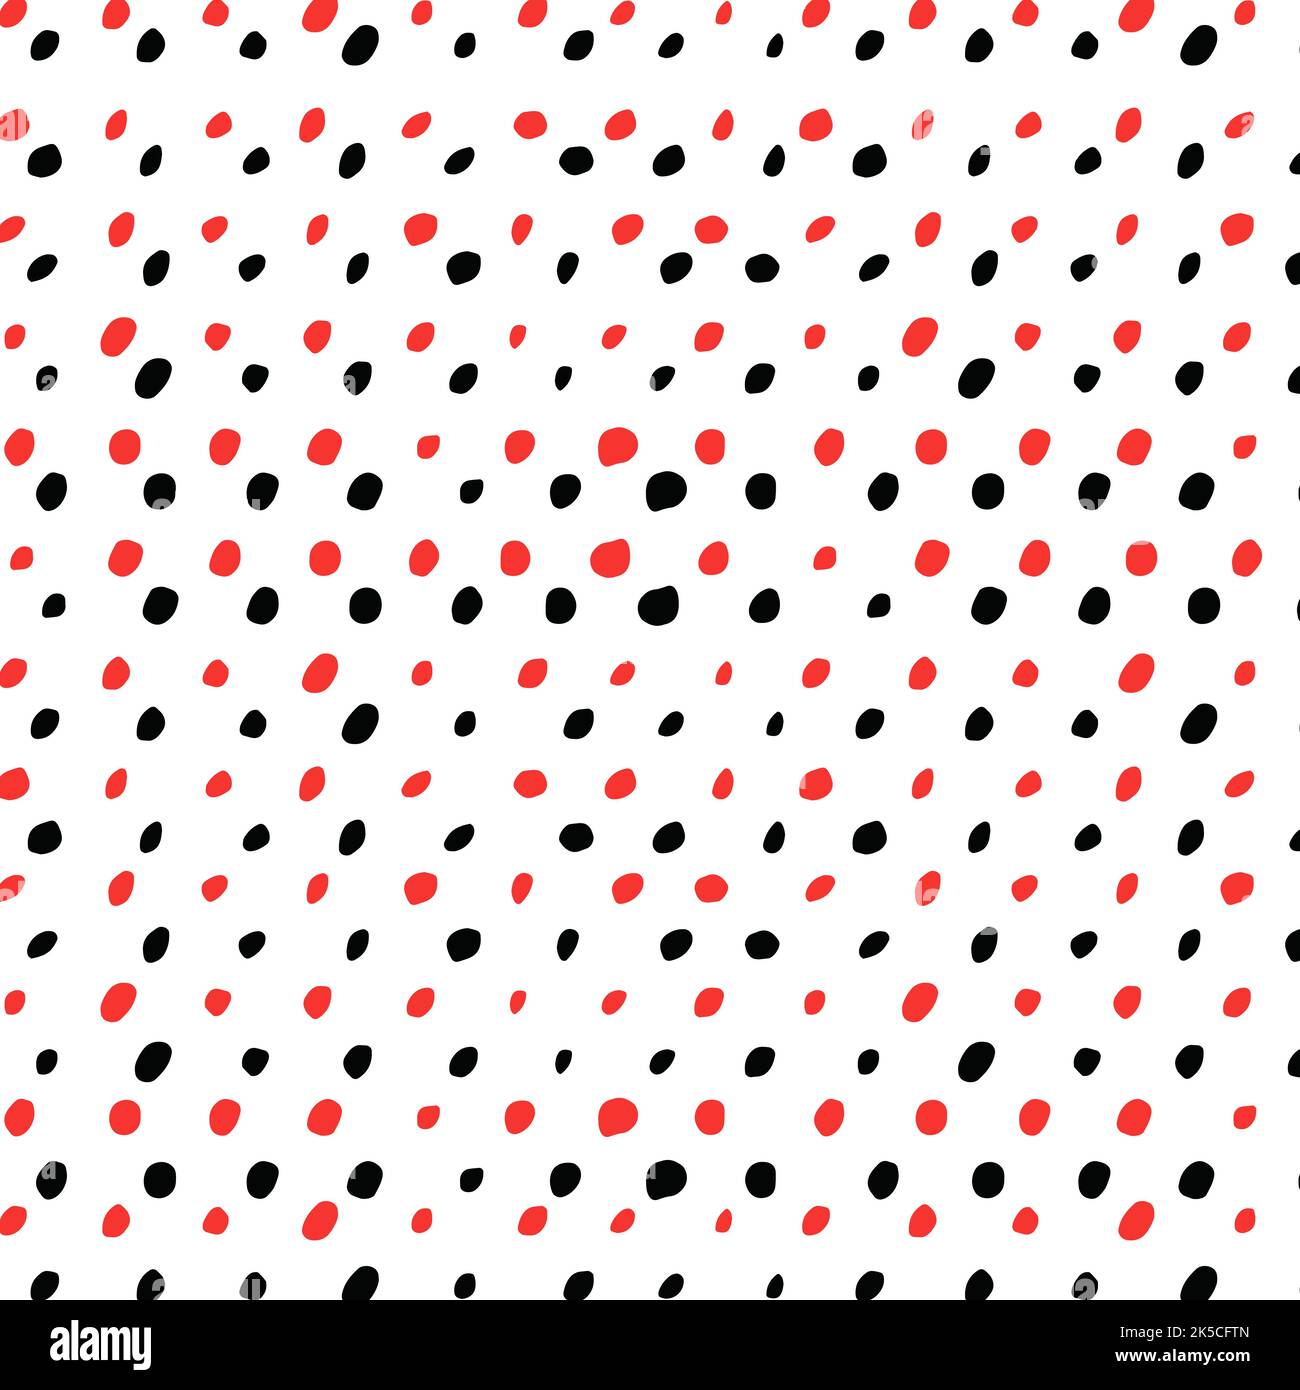 Hand Drawn Red And Black Polka Dot Pattern Vector Illustration Stock Vector